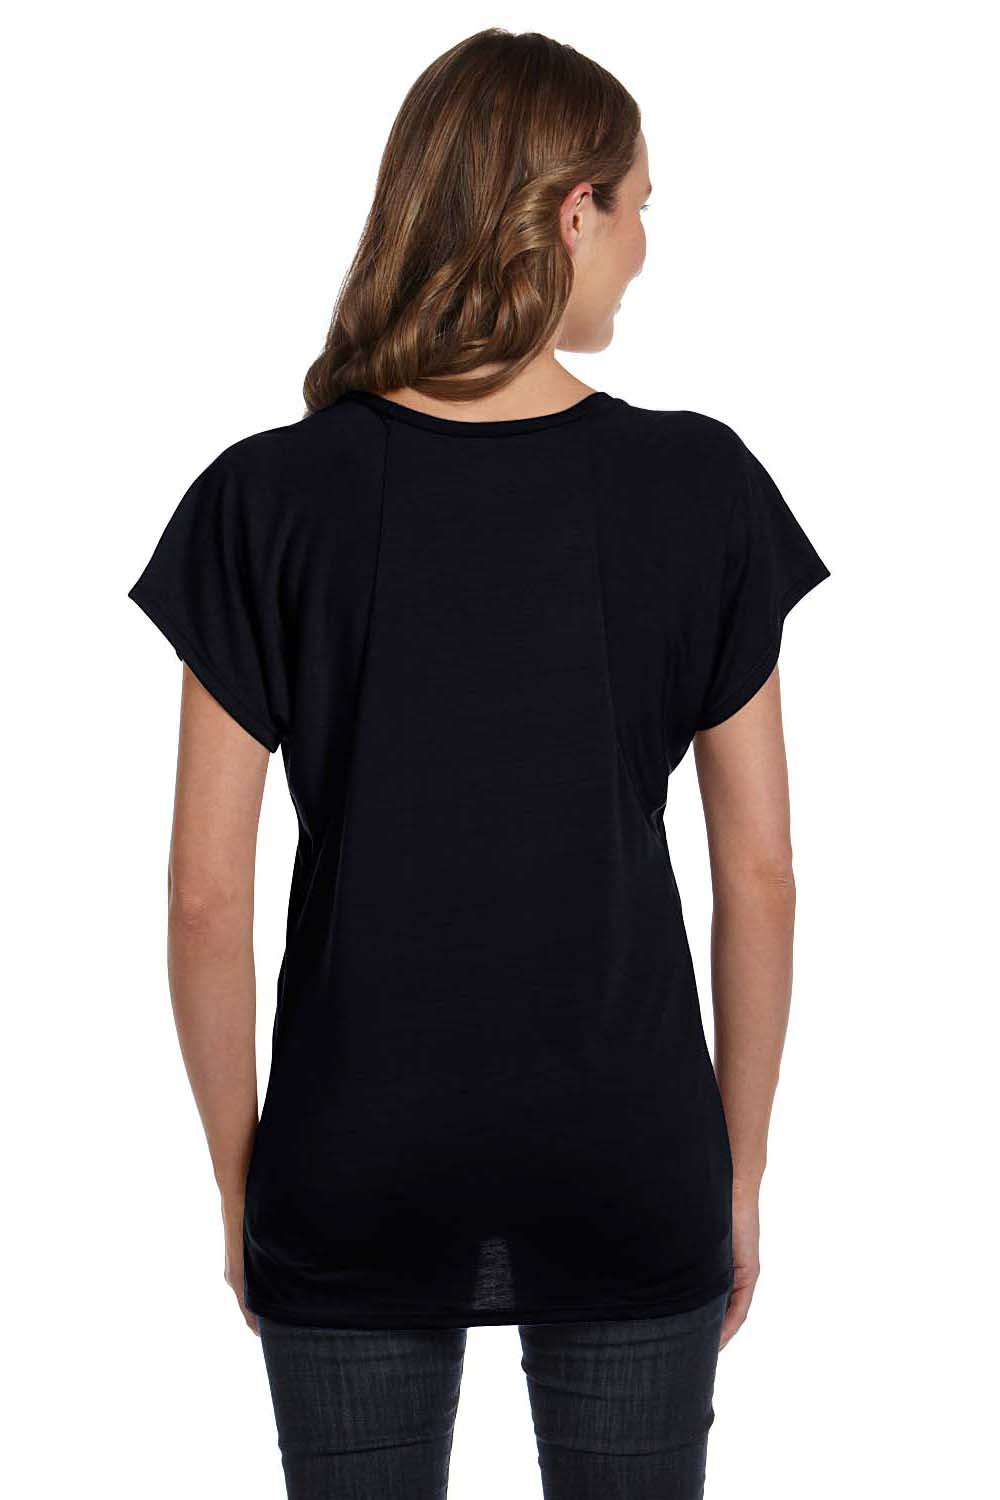 Bella + Canvas B8801/8801 Womens Flowy Short Sleeve Scoop Neck T-Shirt Black Model Back